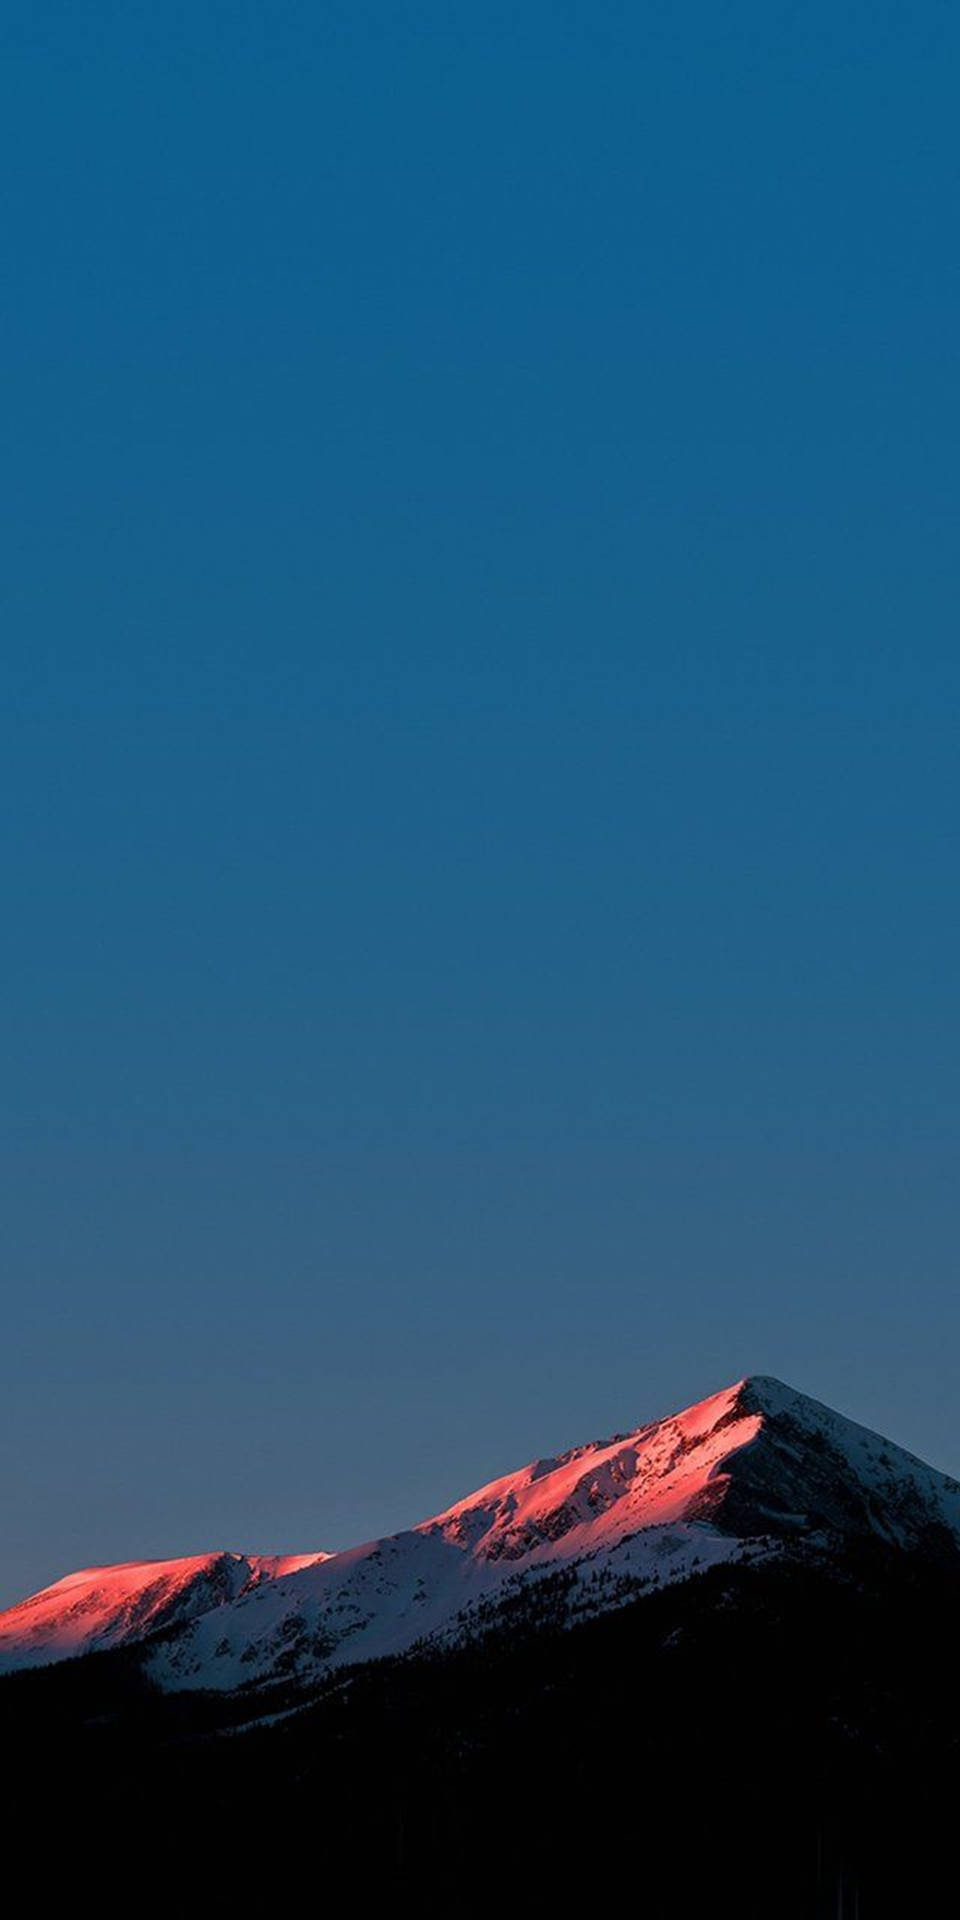 Qhd Mountaintop Under Blue Sky Background